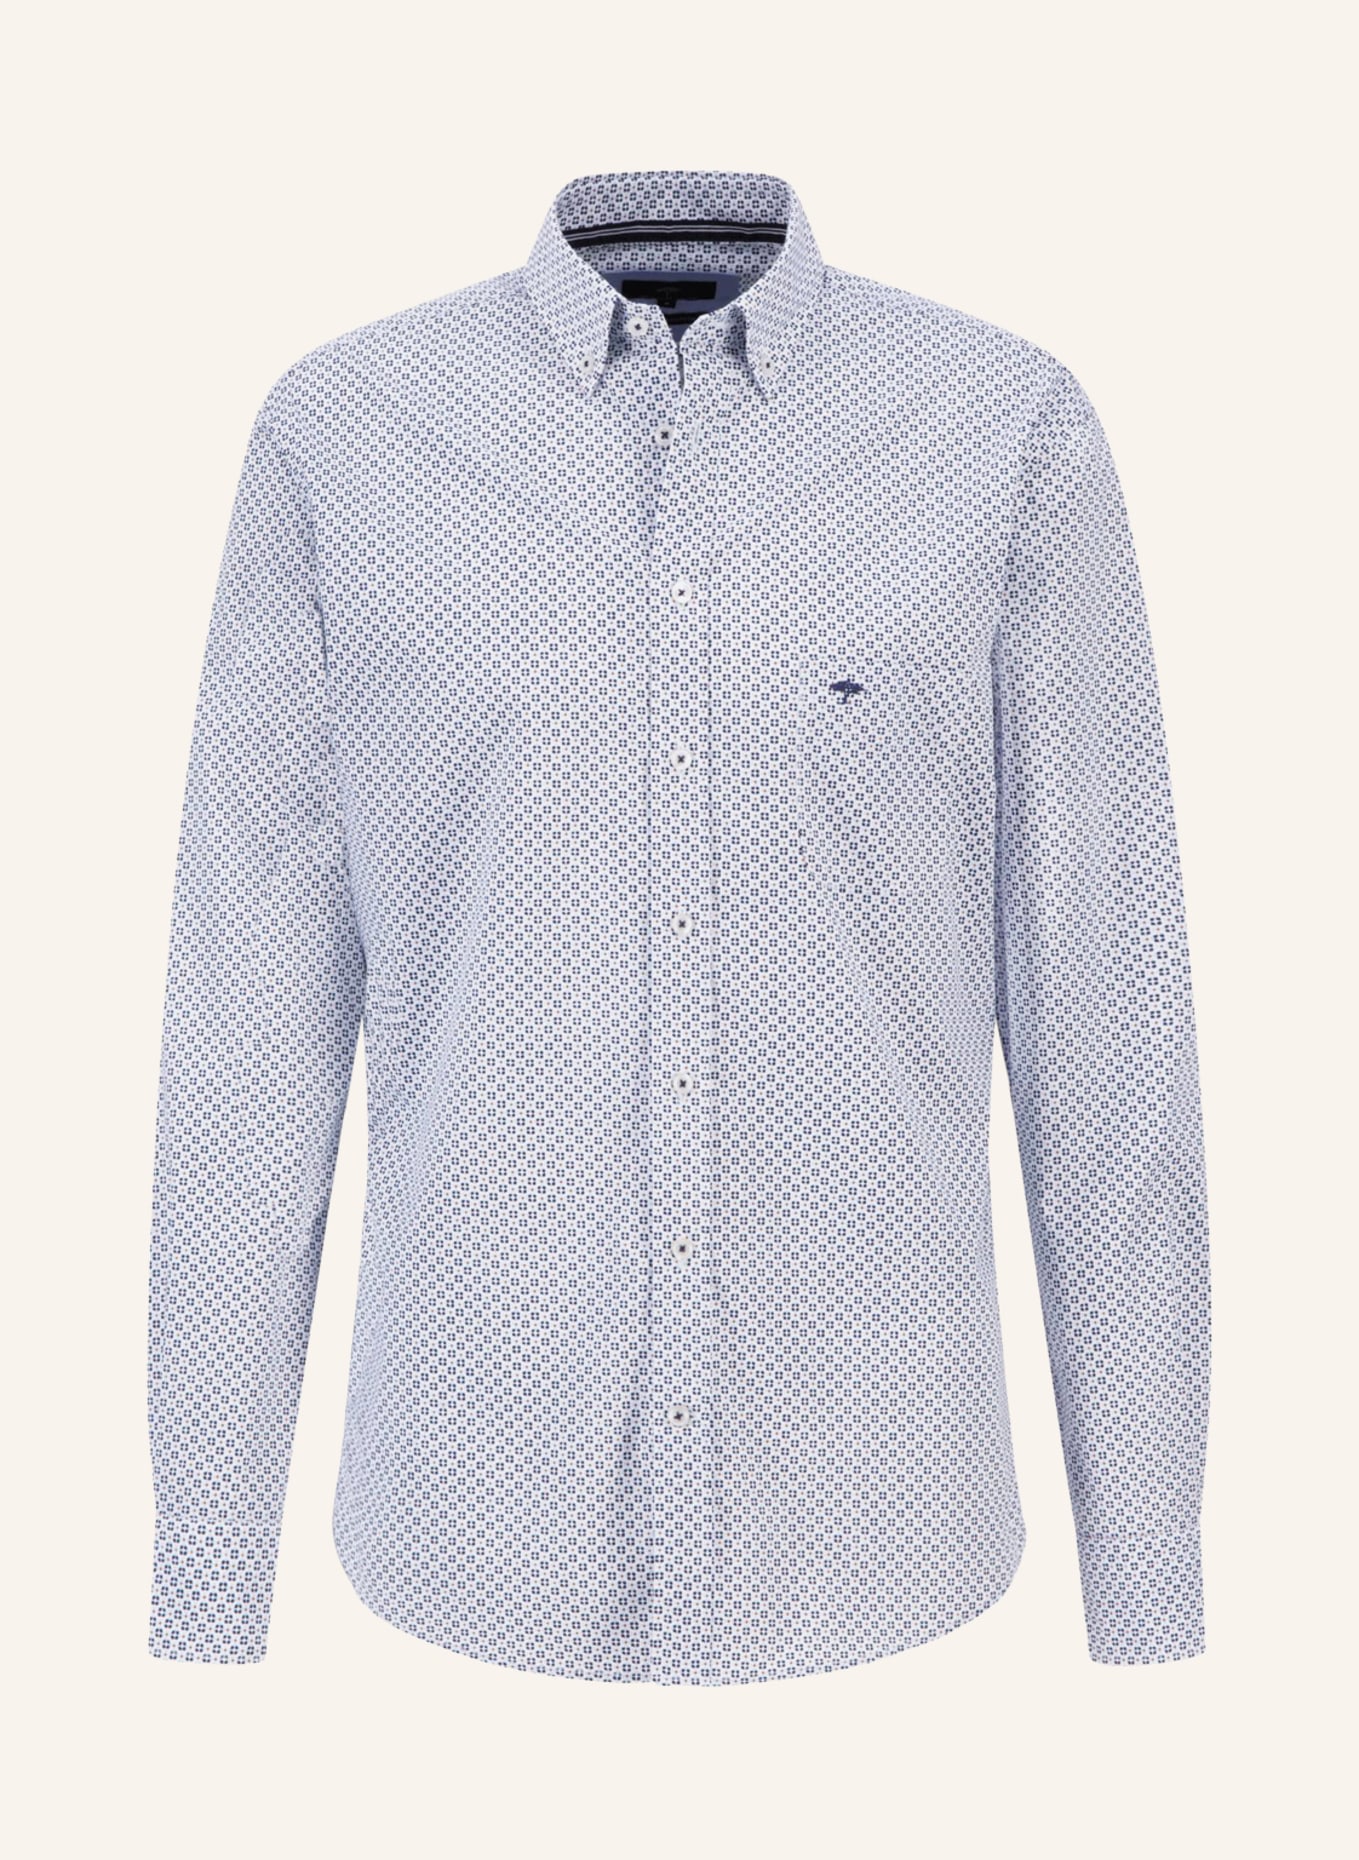 FYNCH-HATTON Hemd Slim Fit, Farbe: DUNKELBLAU/ HELLBLAU/ WEISS (Bild 1)